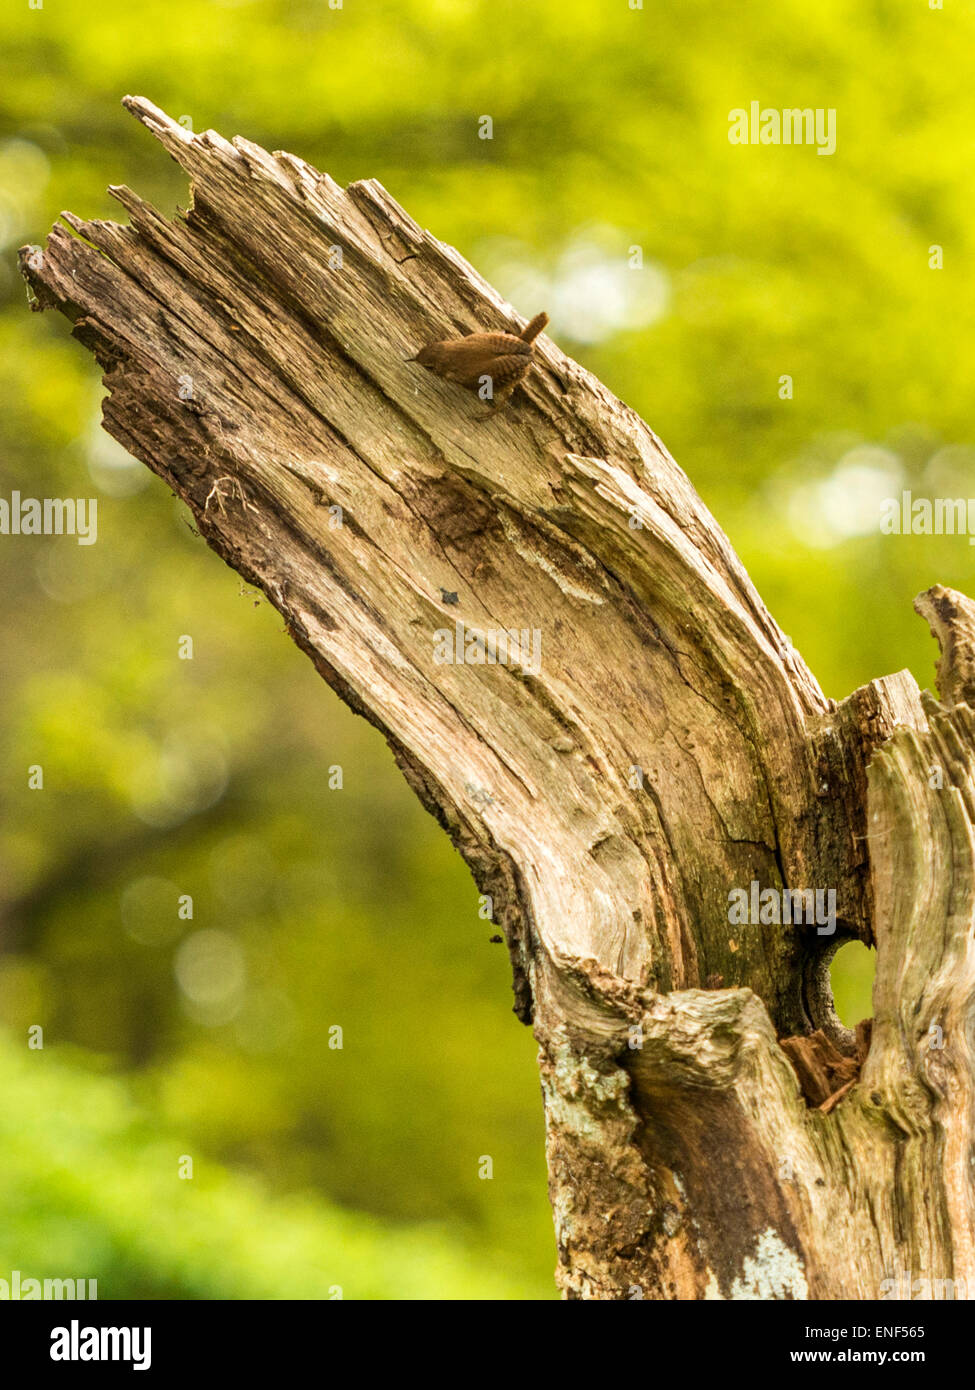 English Country Wildlife - Wren (Troglodytidae) Perched on Wooden Stump Stock Photo